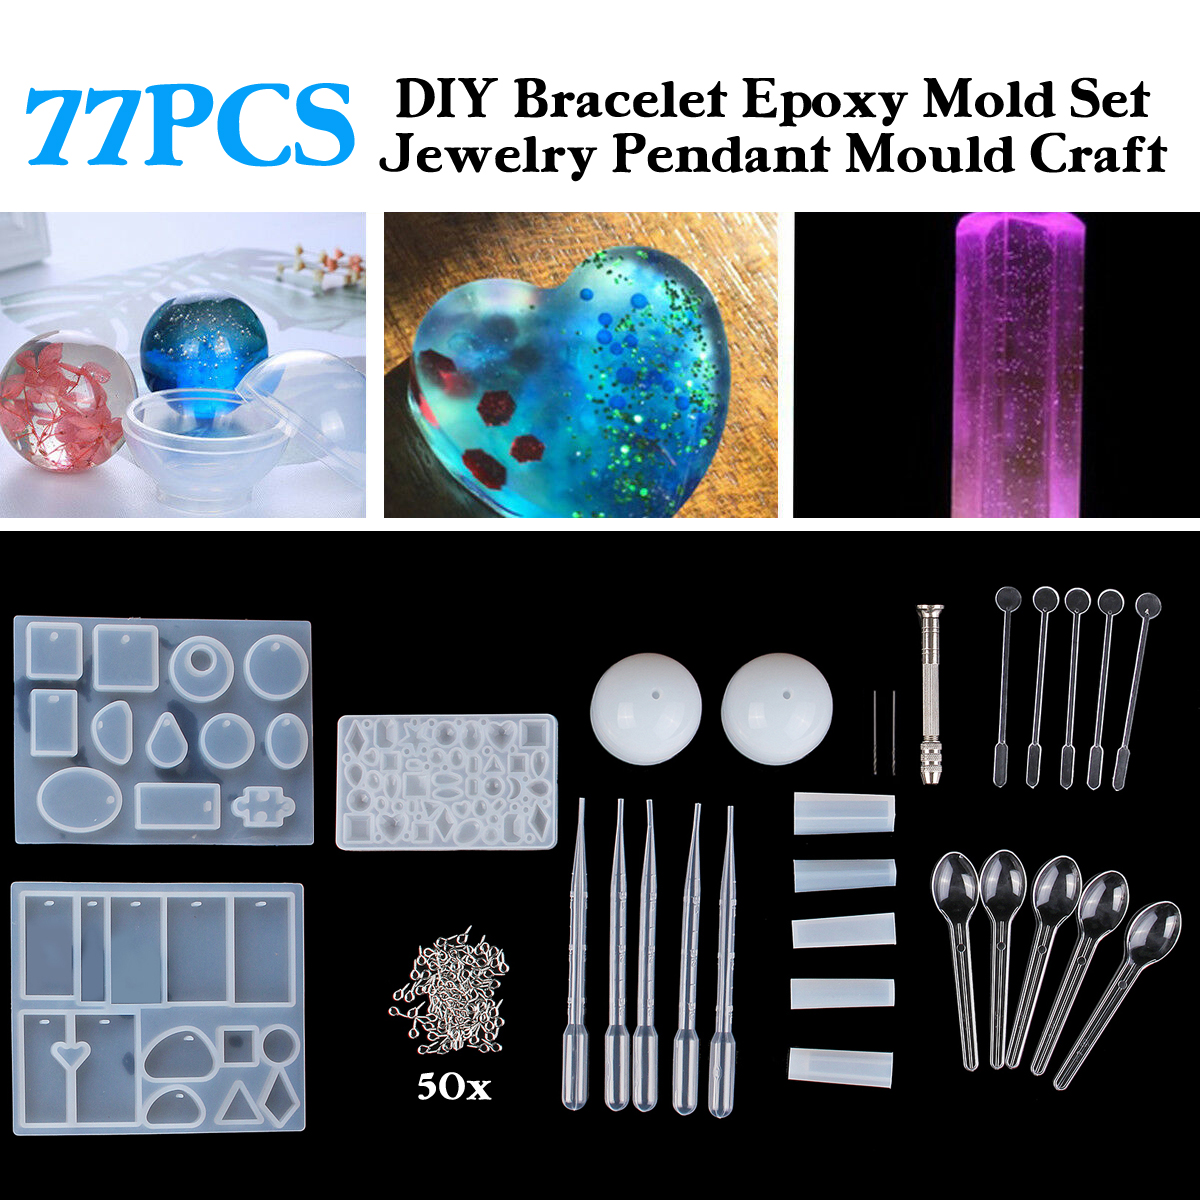 77PCS-DIY-Bracelet-Pendant-Epoxy-Mold-Set-Jewelry-Pendant-Mould-Craft-1449506-1